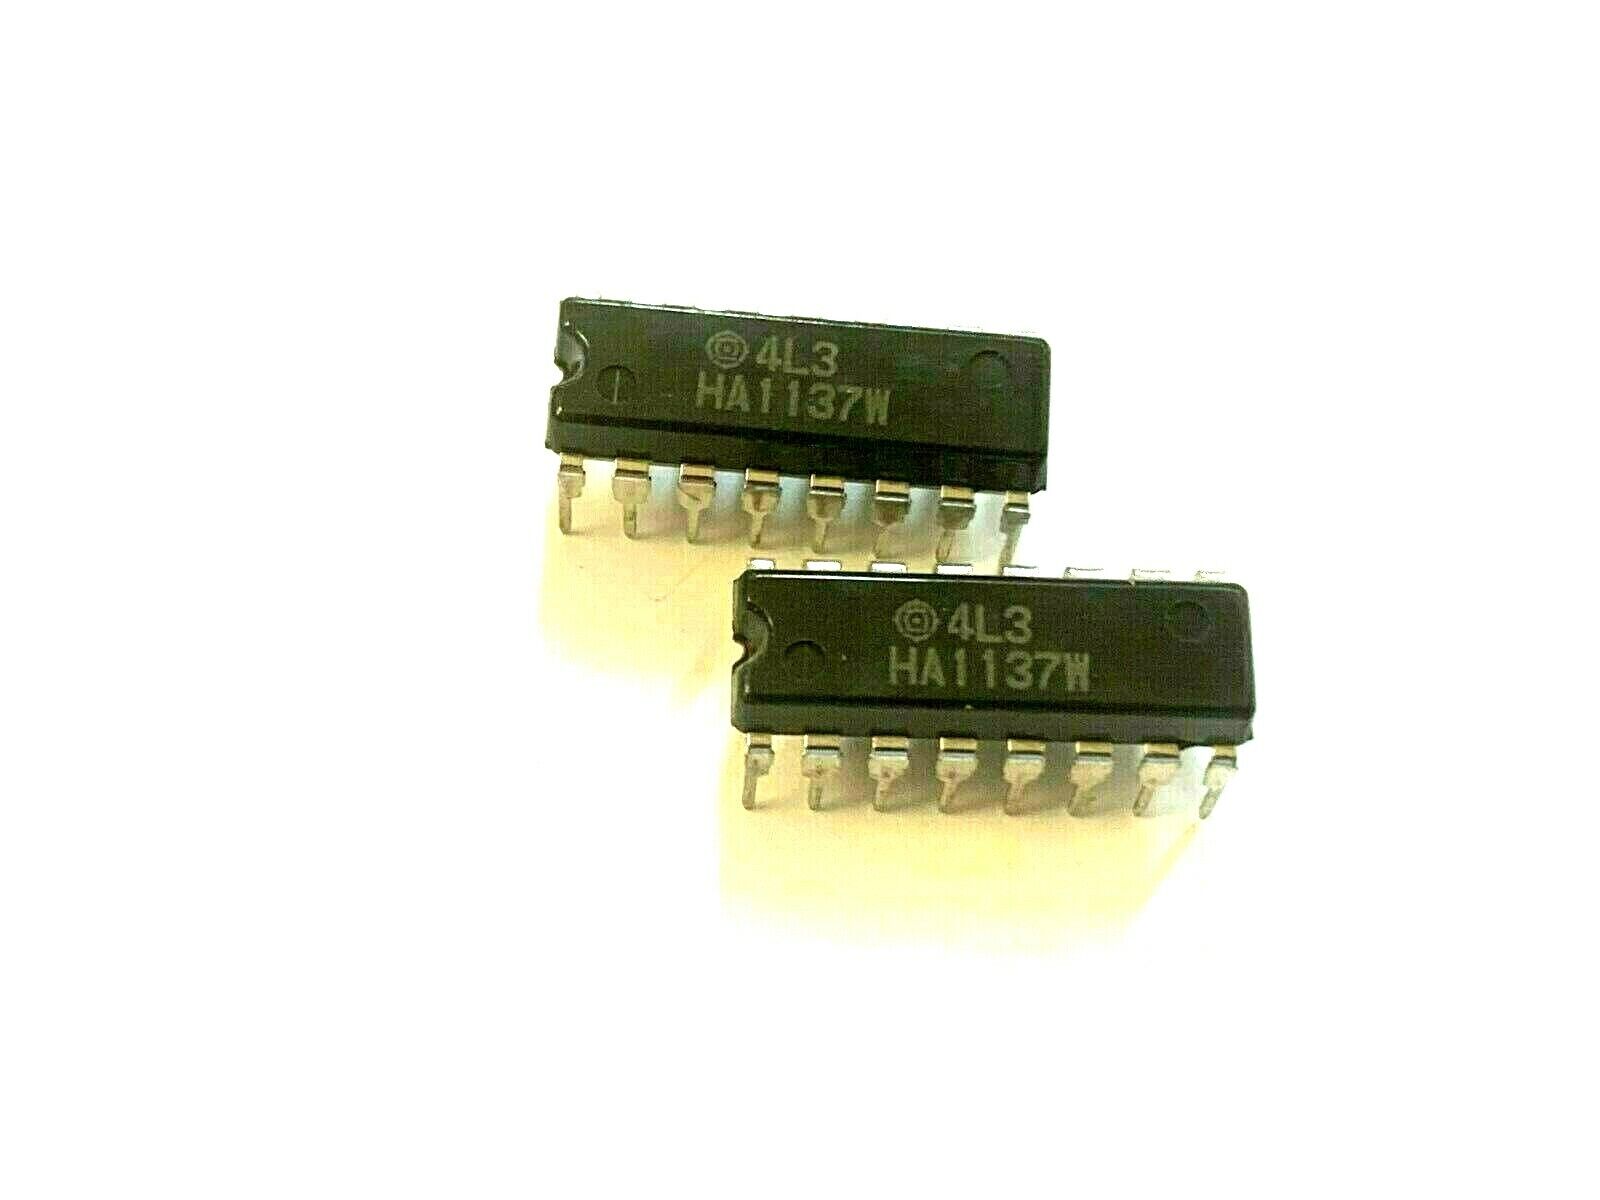 4 Pieces HA1137W Original New Hitachi Integrated Circuit